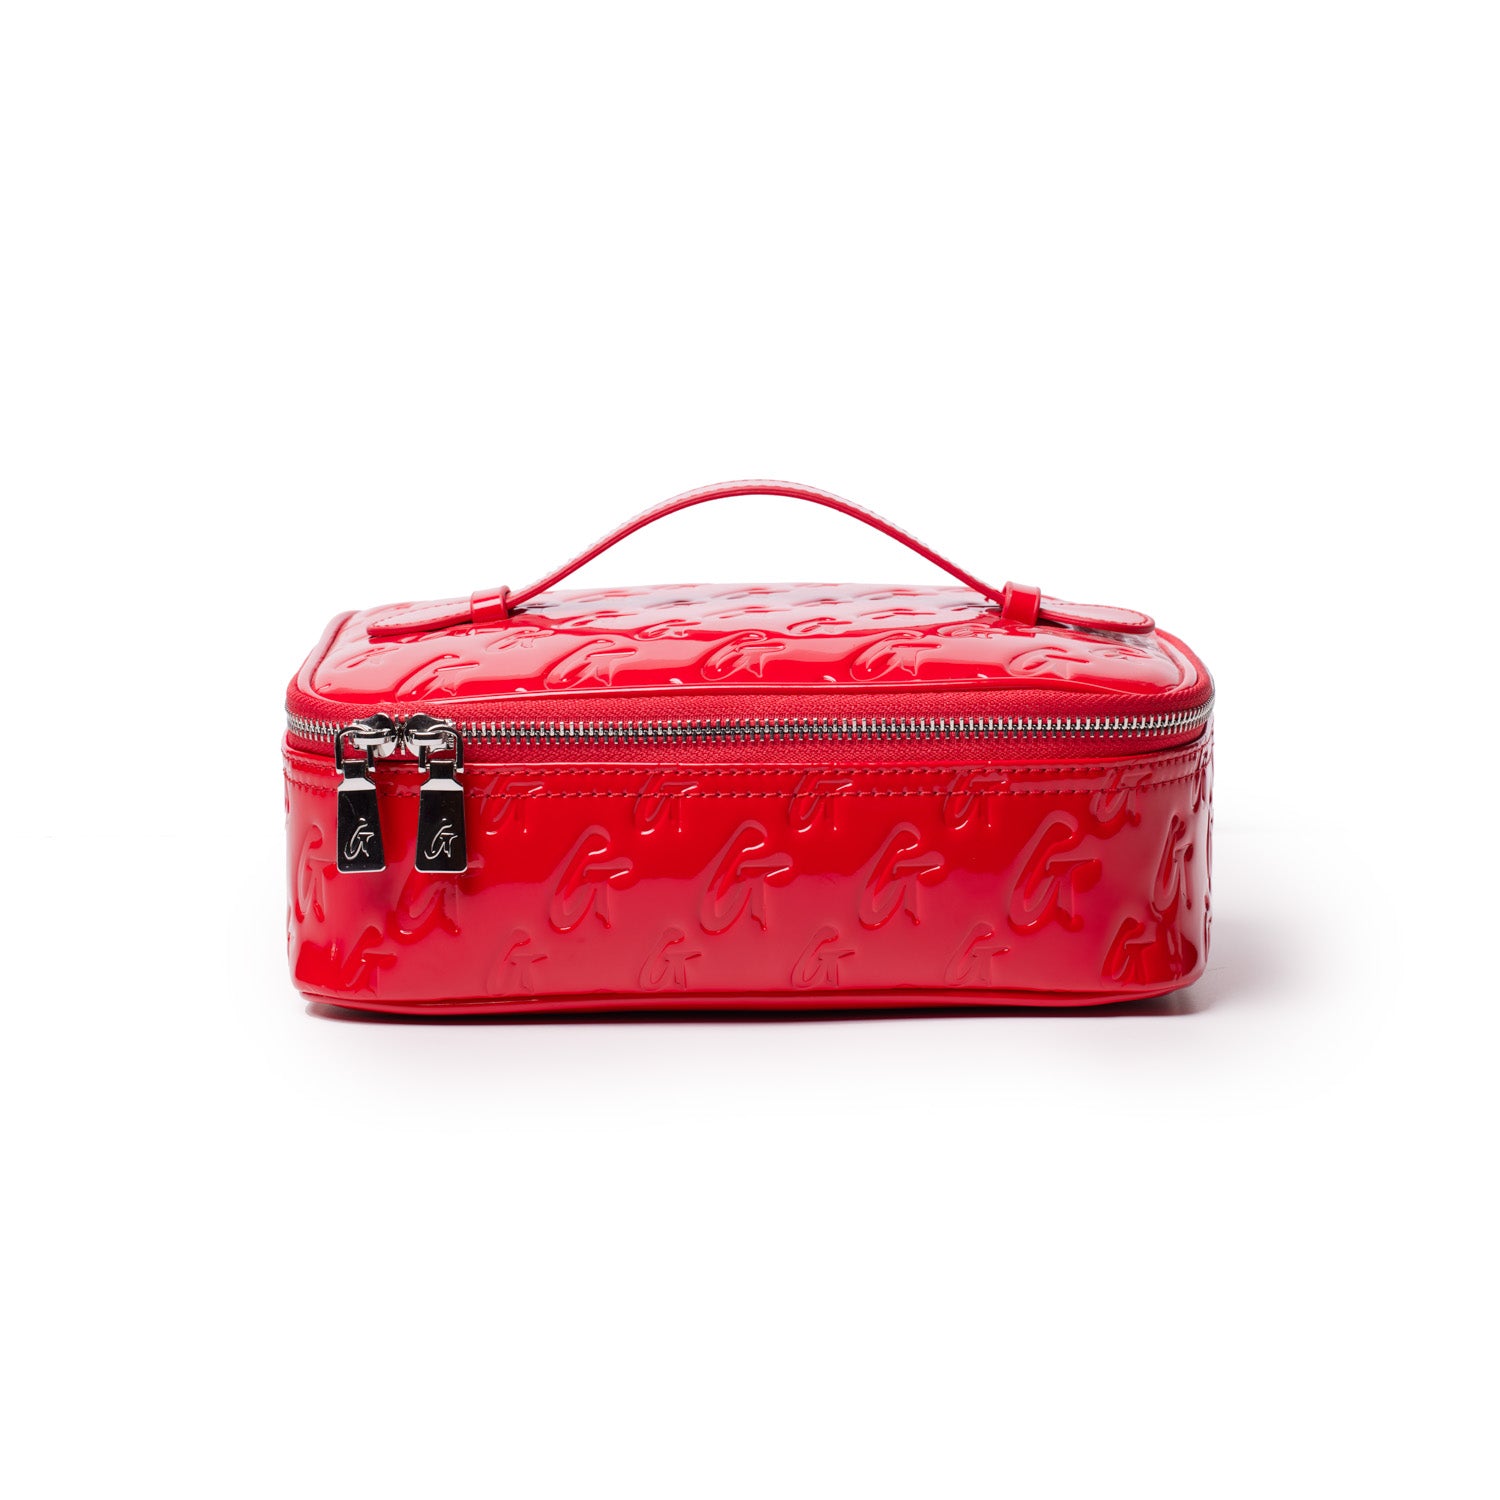 MONOGRAM DUFFLE BAG MIRROR RED – Glam-Aholic Lifestyle